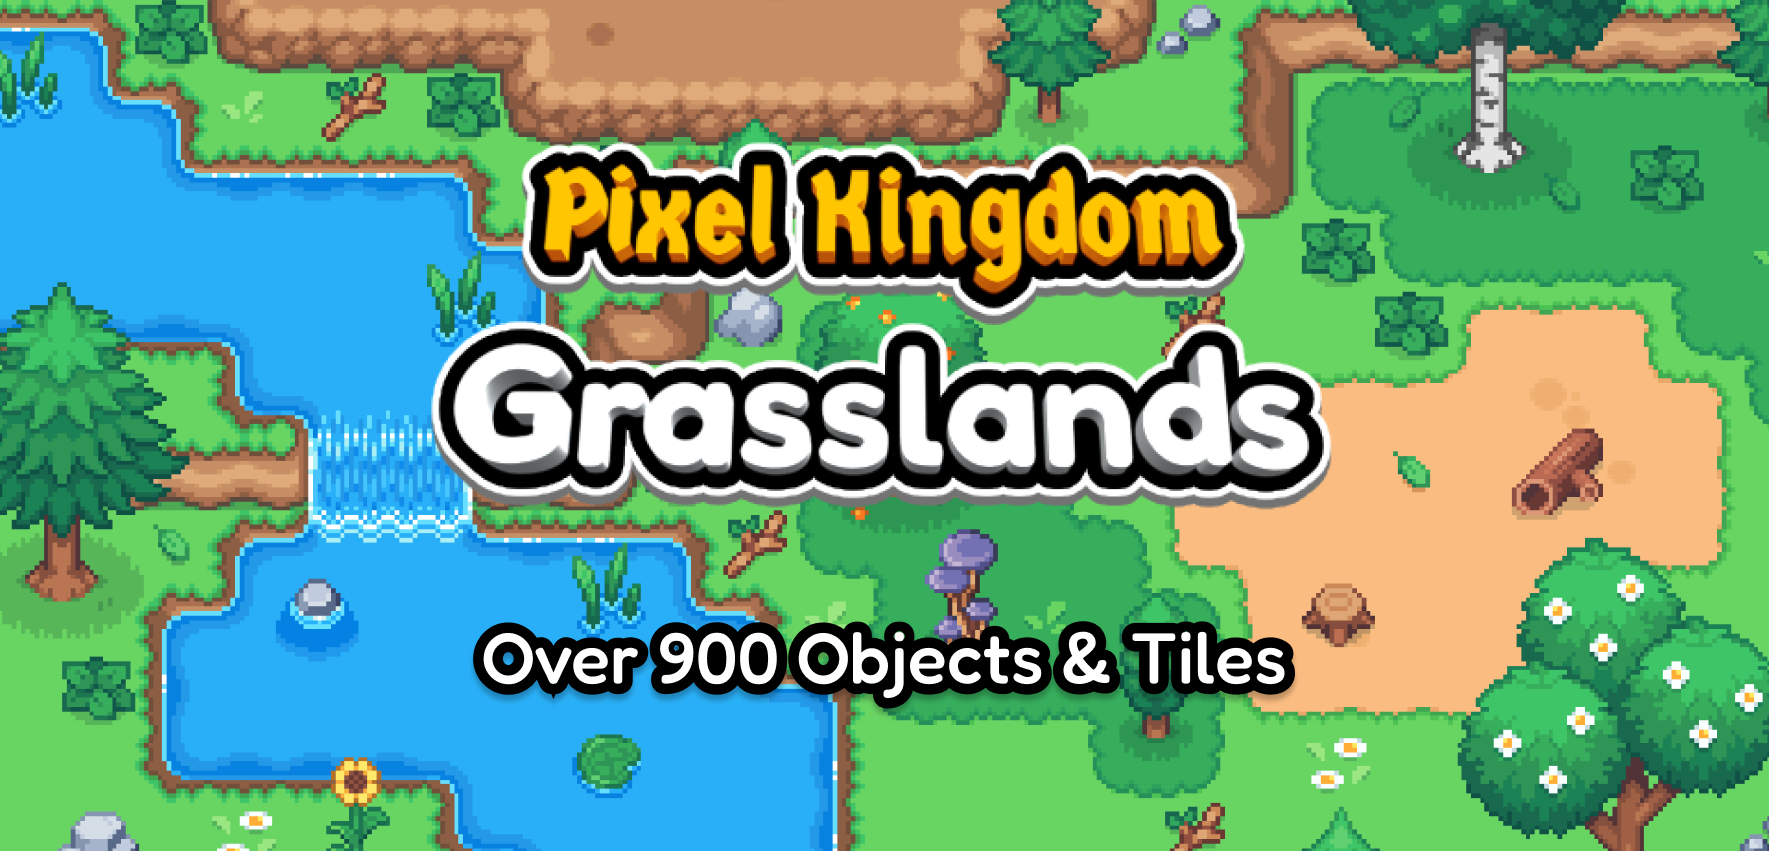 Pixel Kingdom - Grasslands